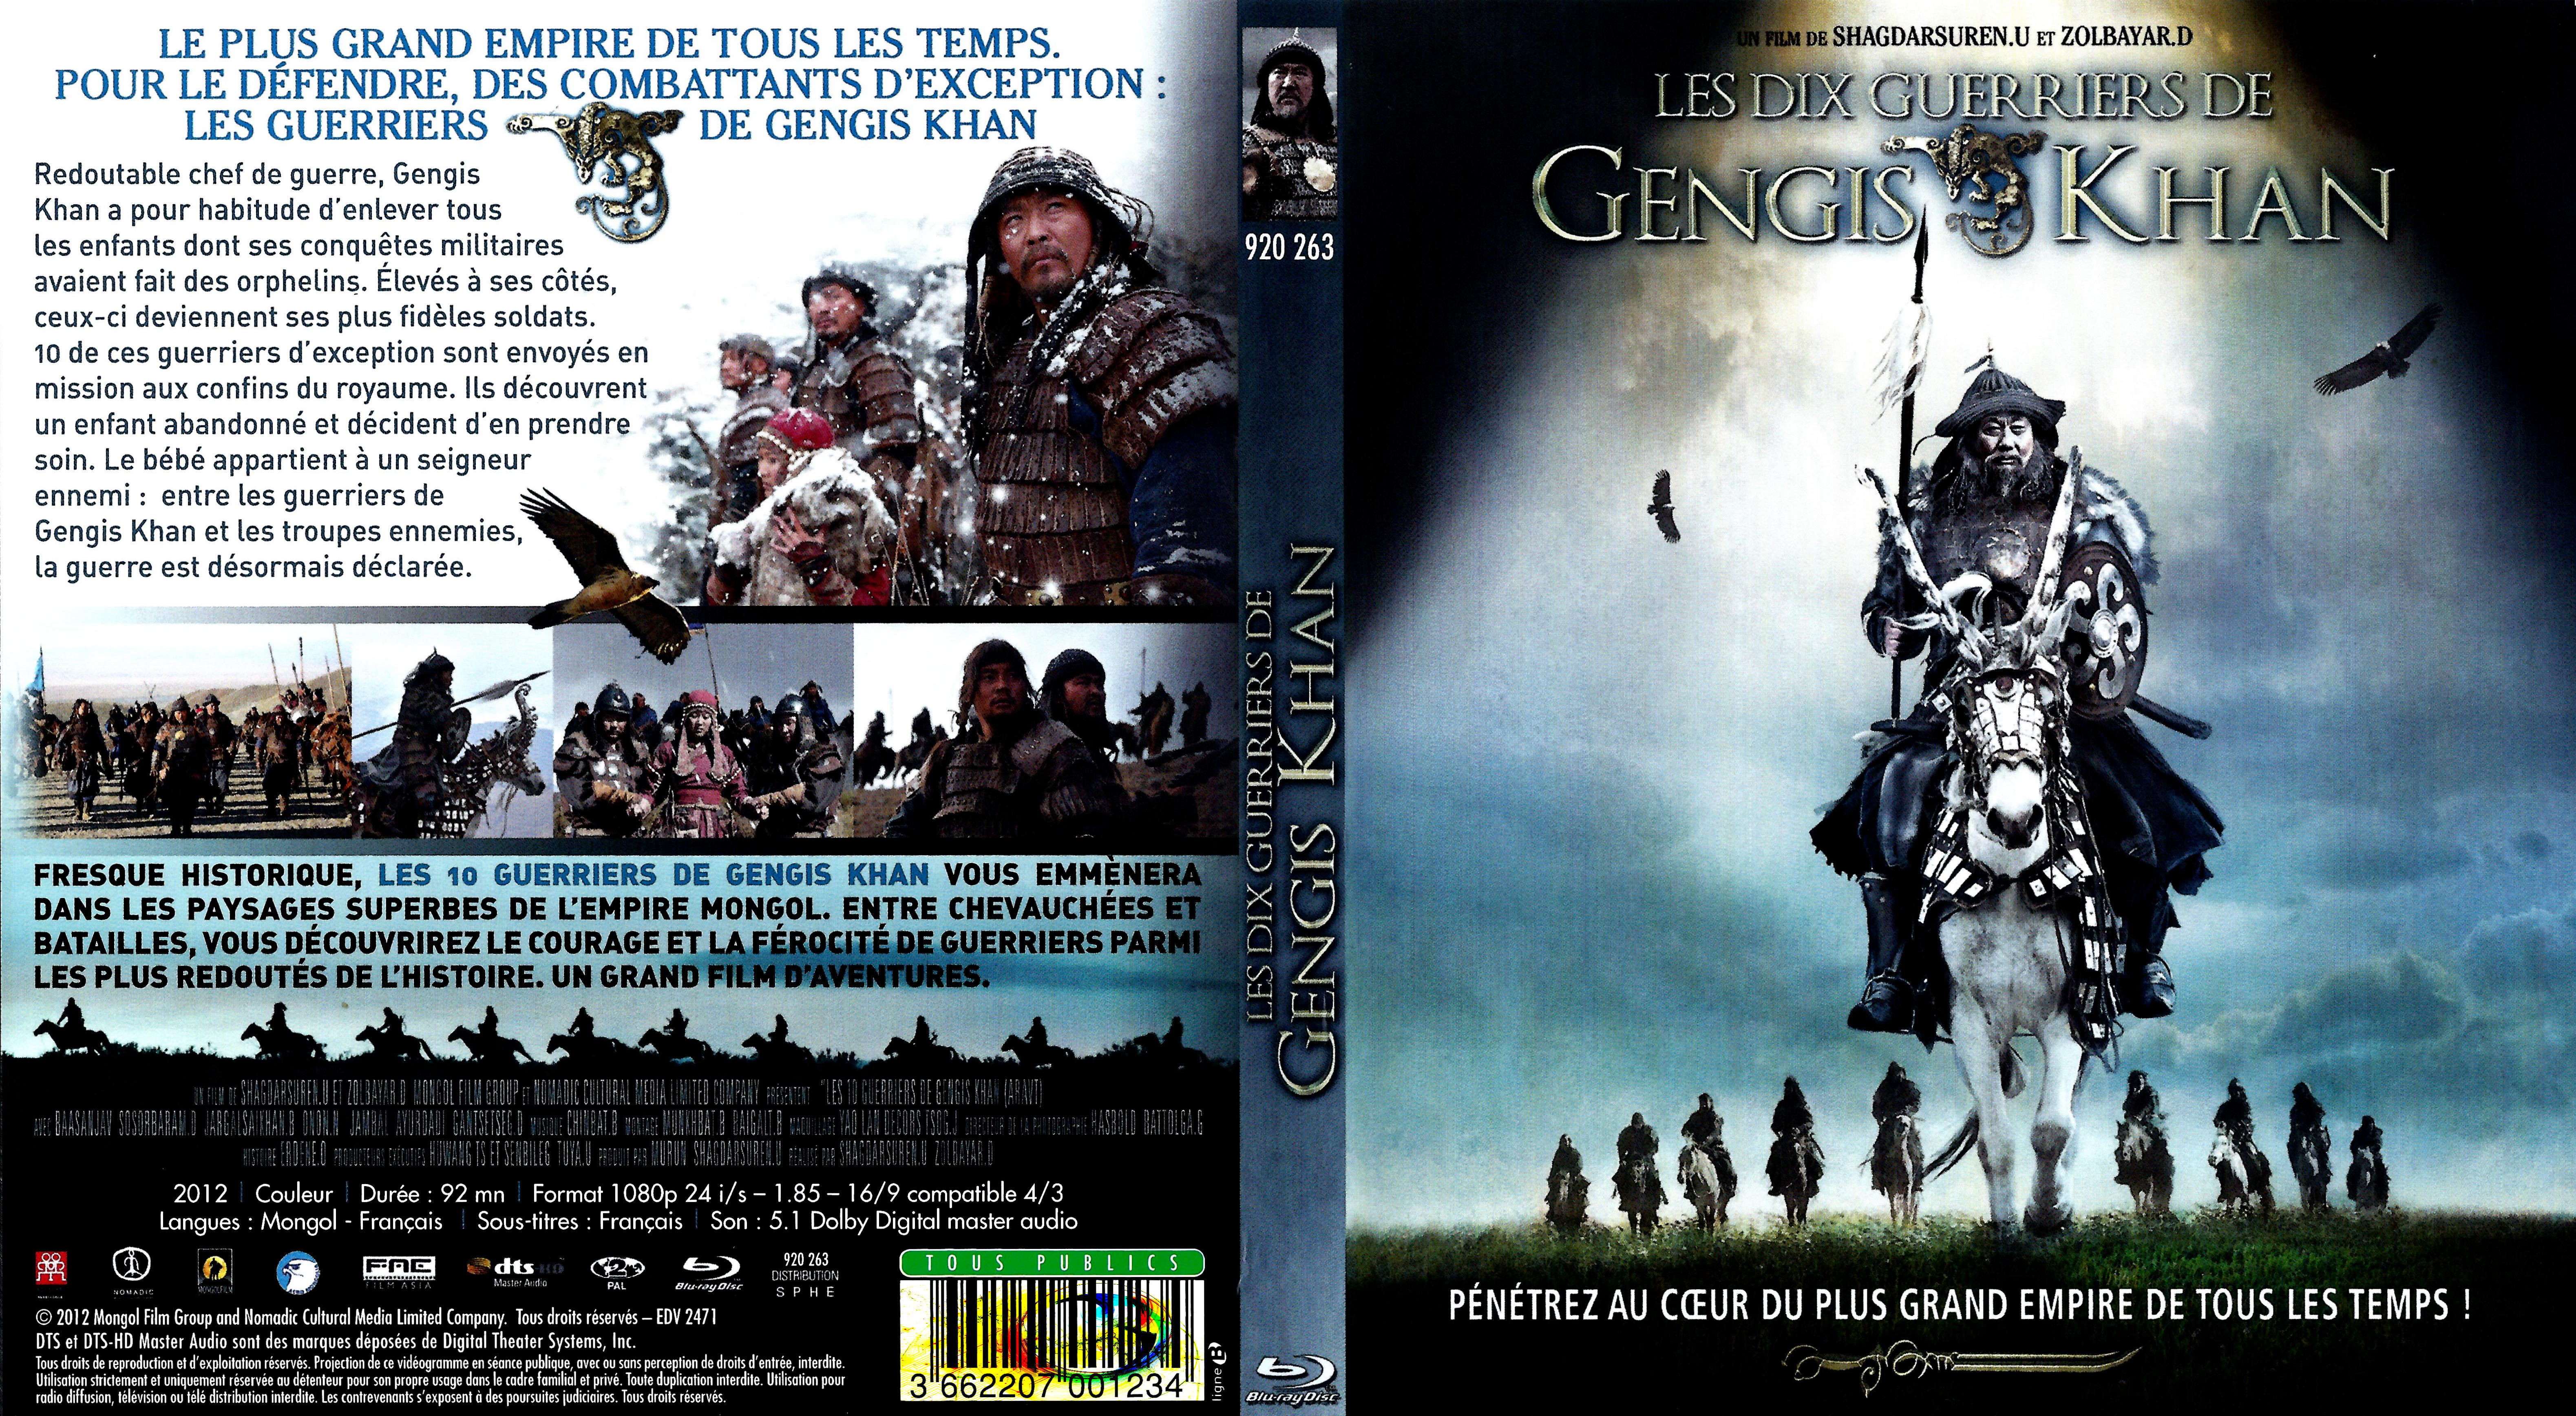 Jaquette DVD Les dix guerriers de gengis khan (BLU-RAY)